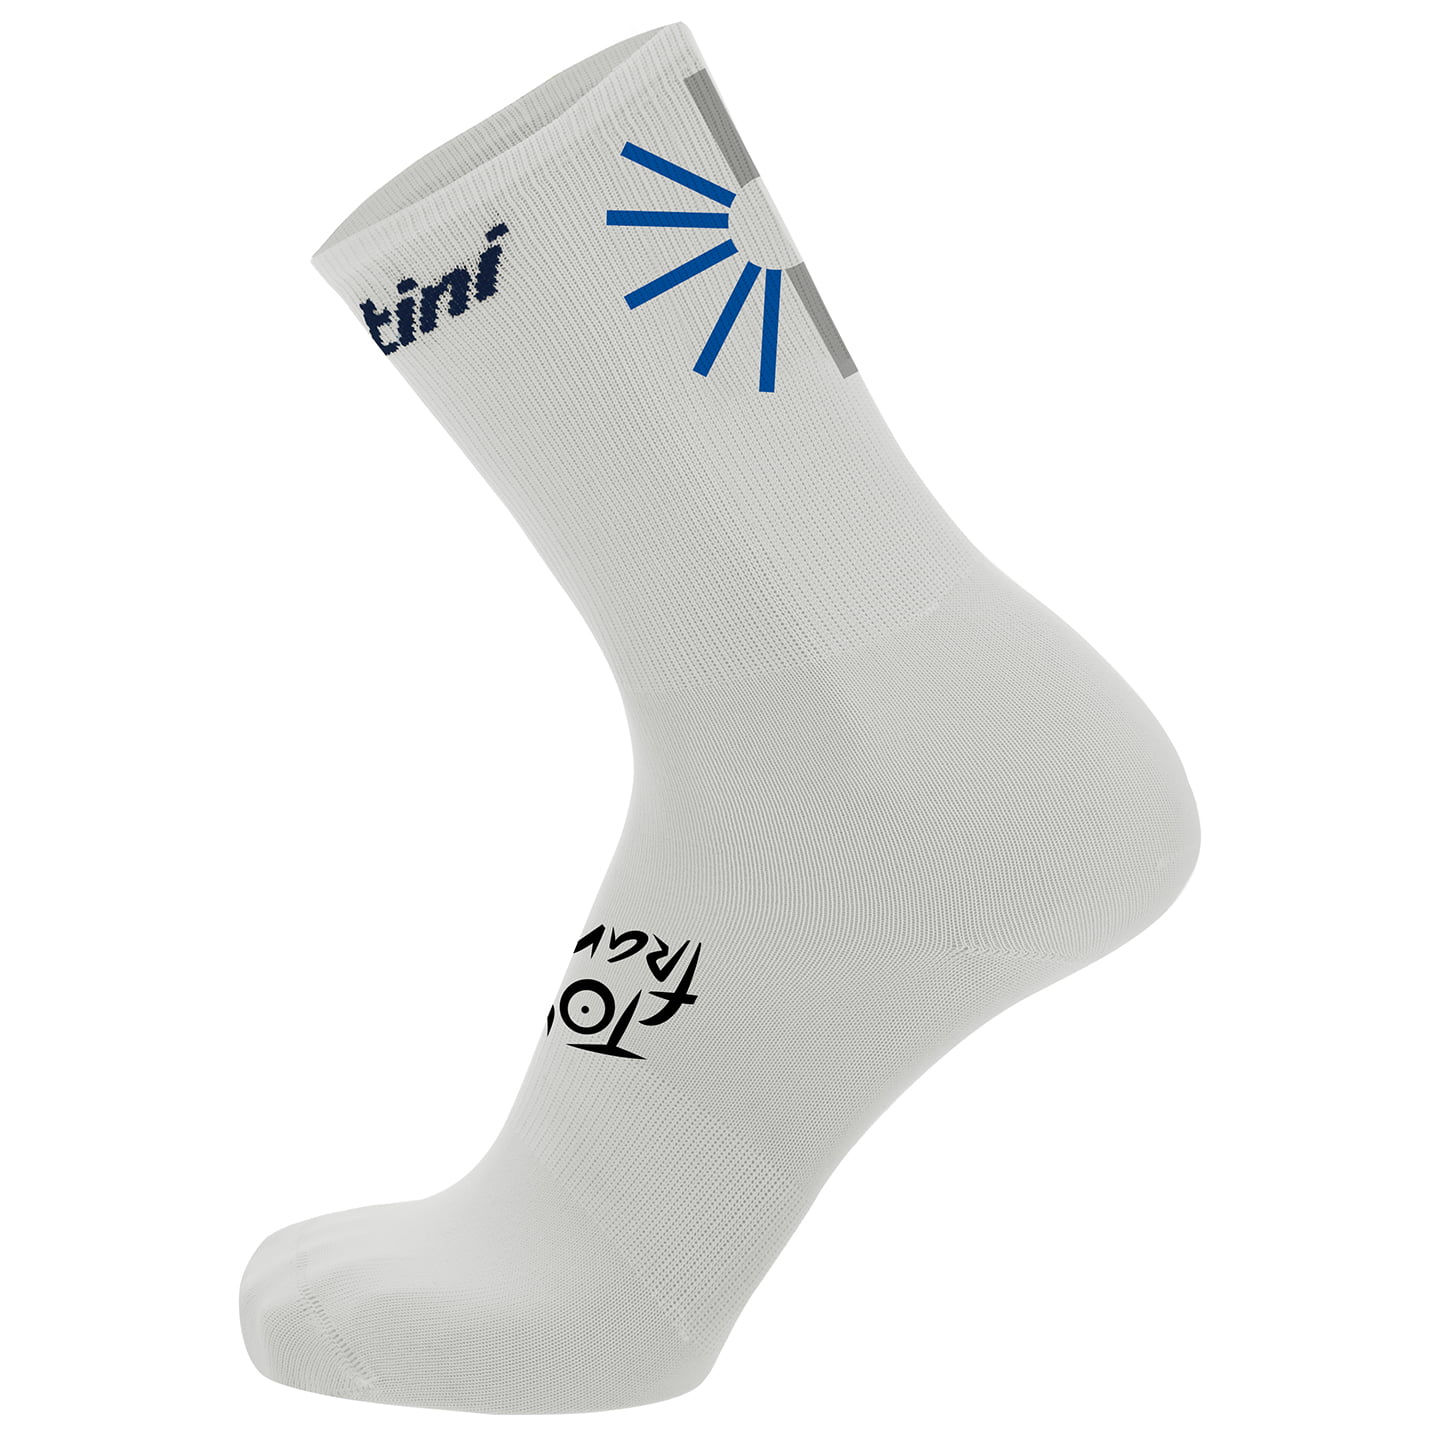 Tour de France Trionfo 2023 Cycling Socks Cycling Socks, for men, size M-L, MTB socks, Cycle gear